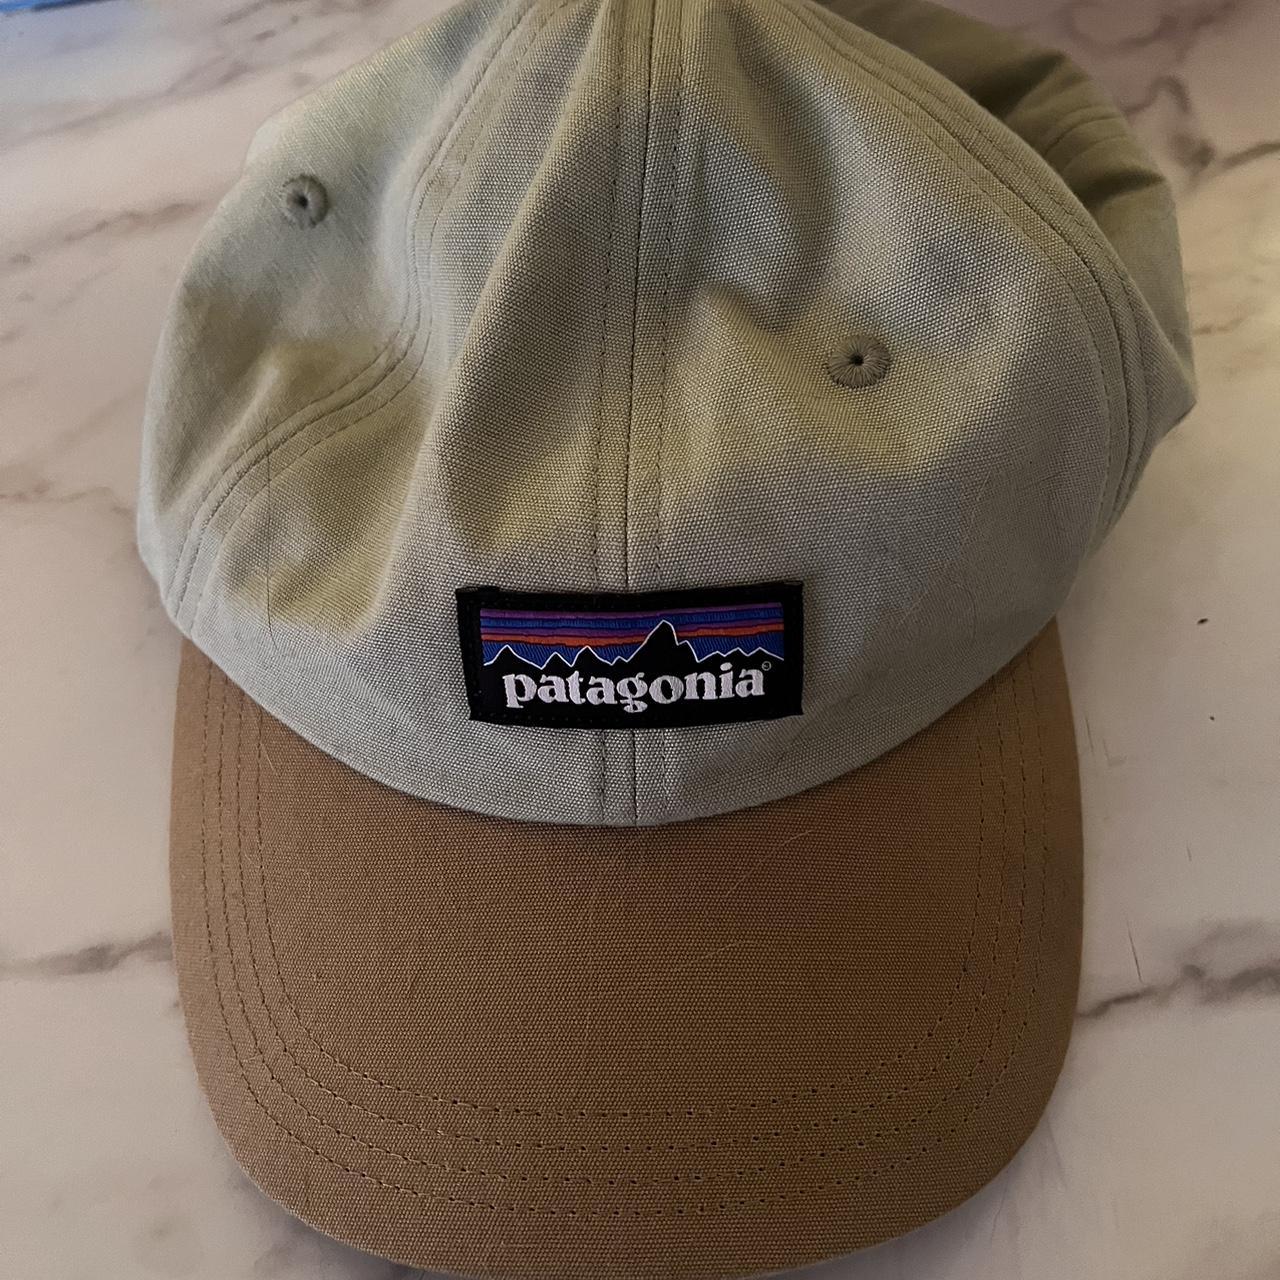 Patagonia hat - Depop